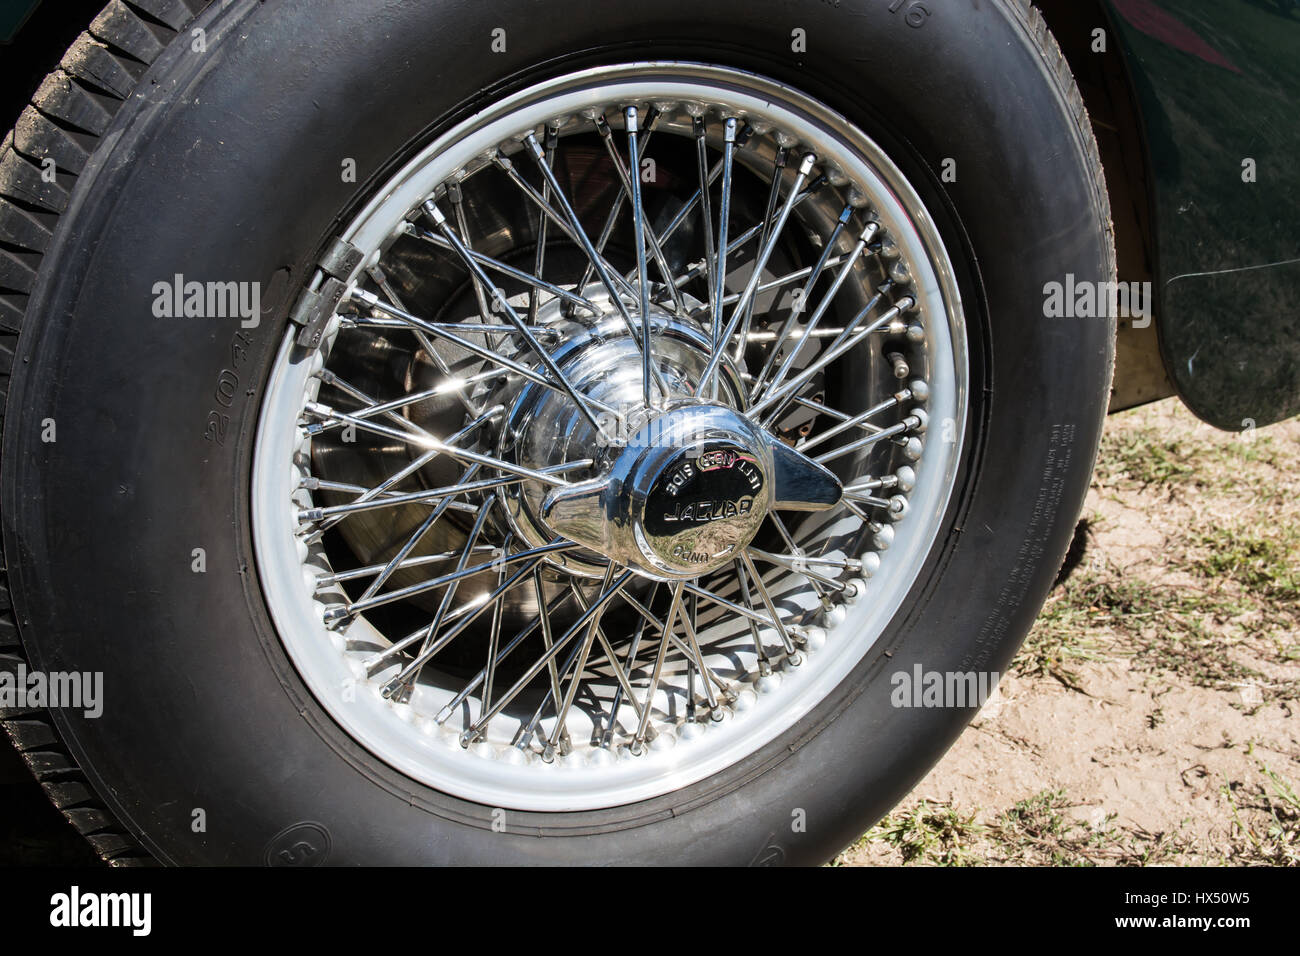 Wire Wheel on a 1950's C Type Jaguar racing Car. Stock Photo